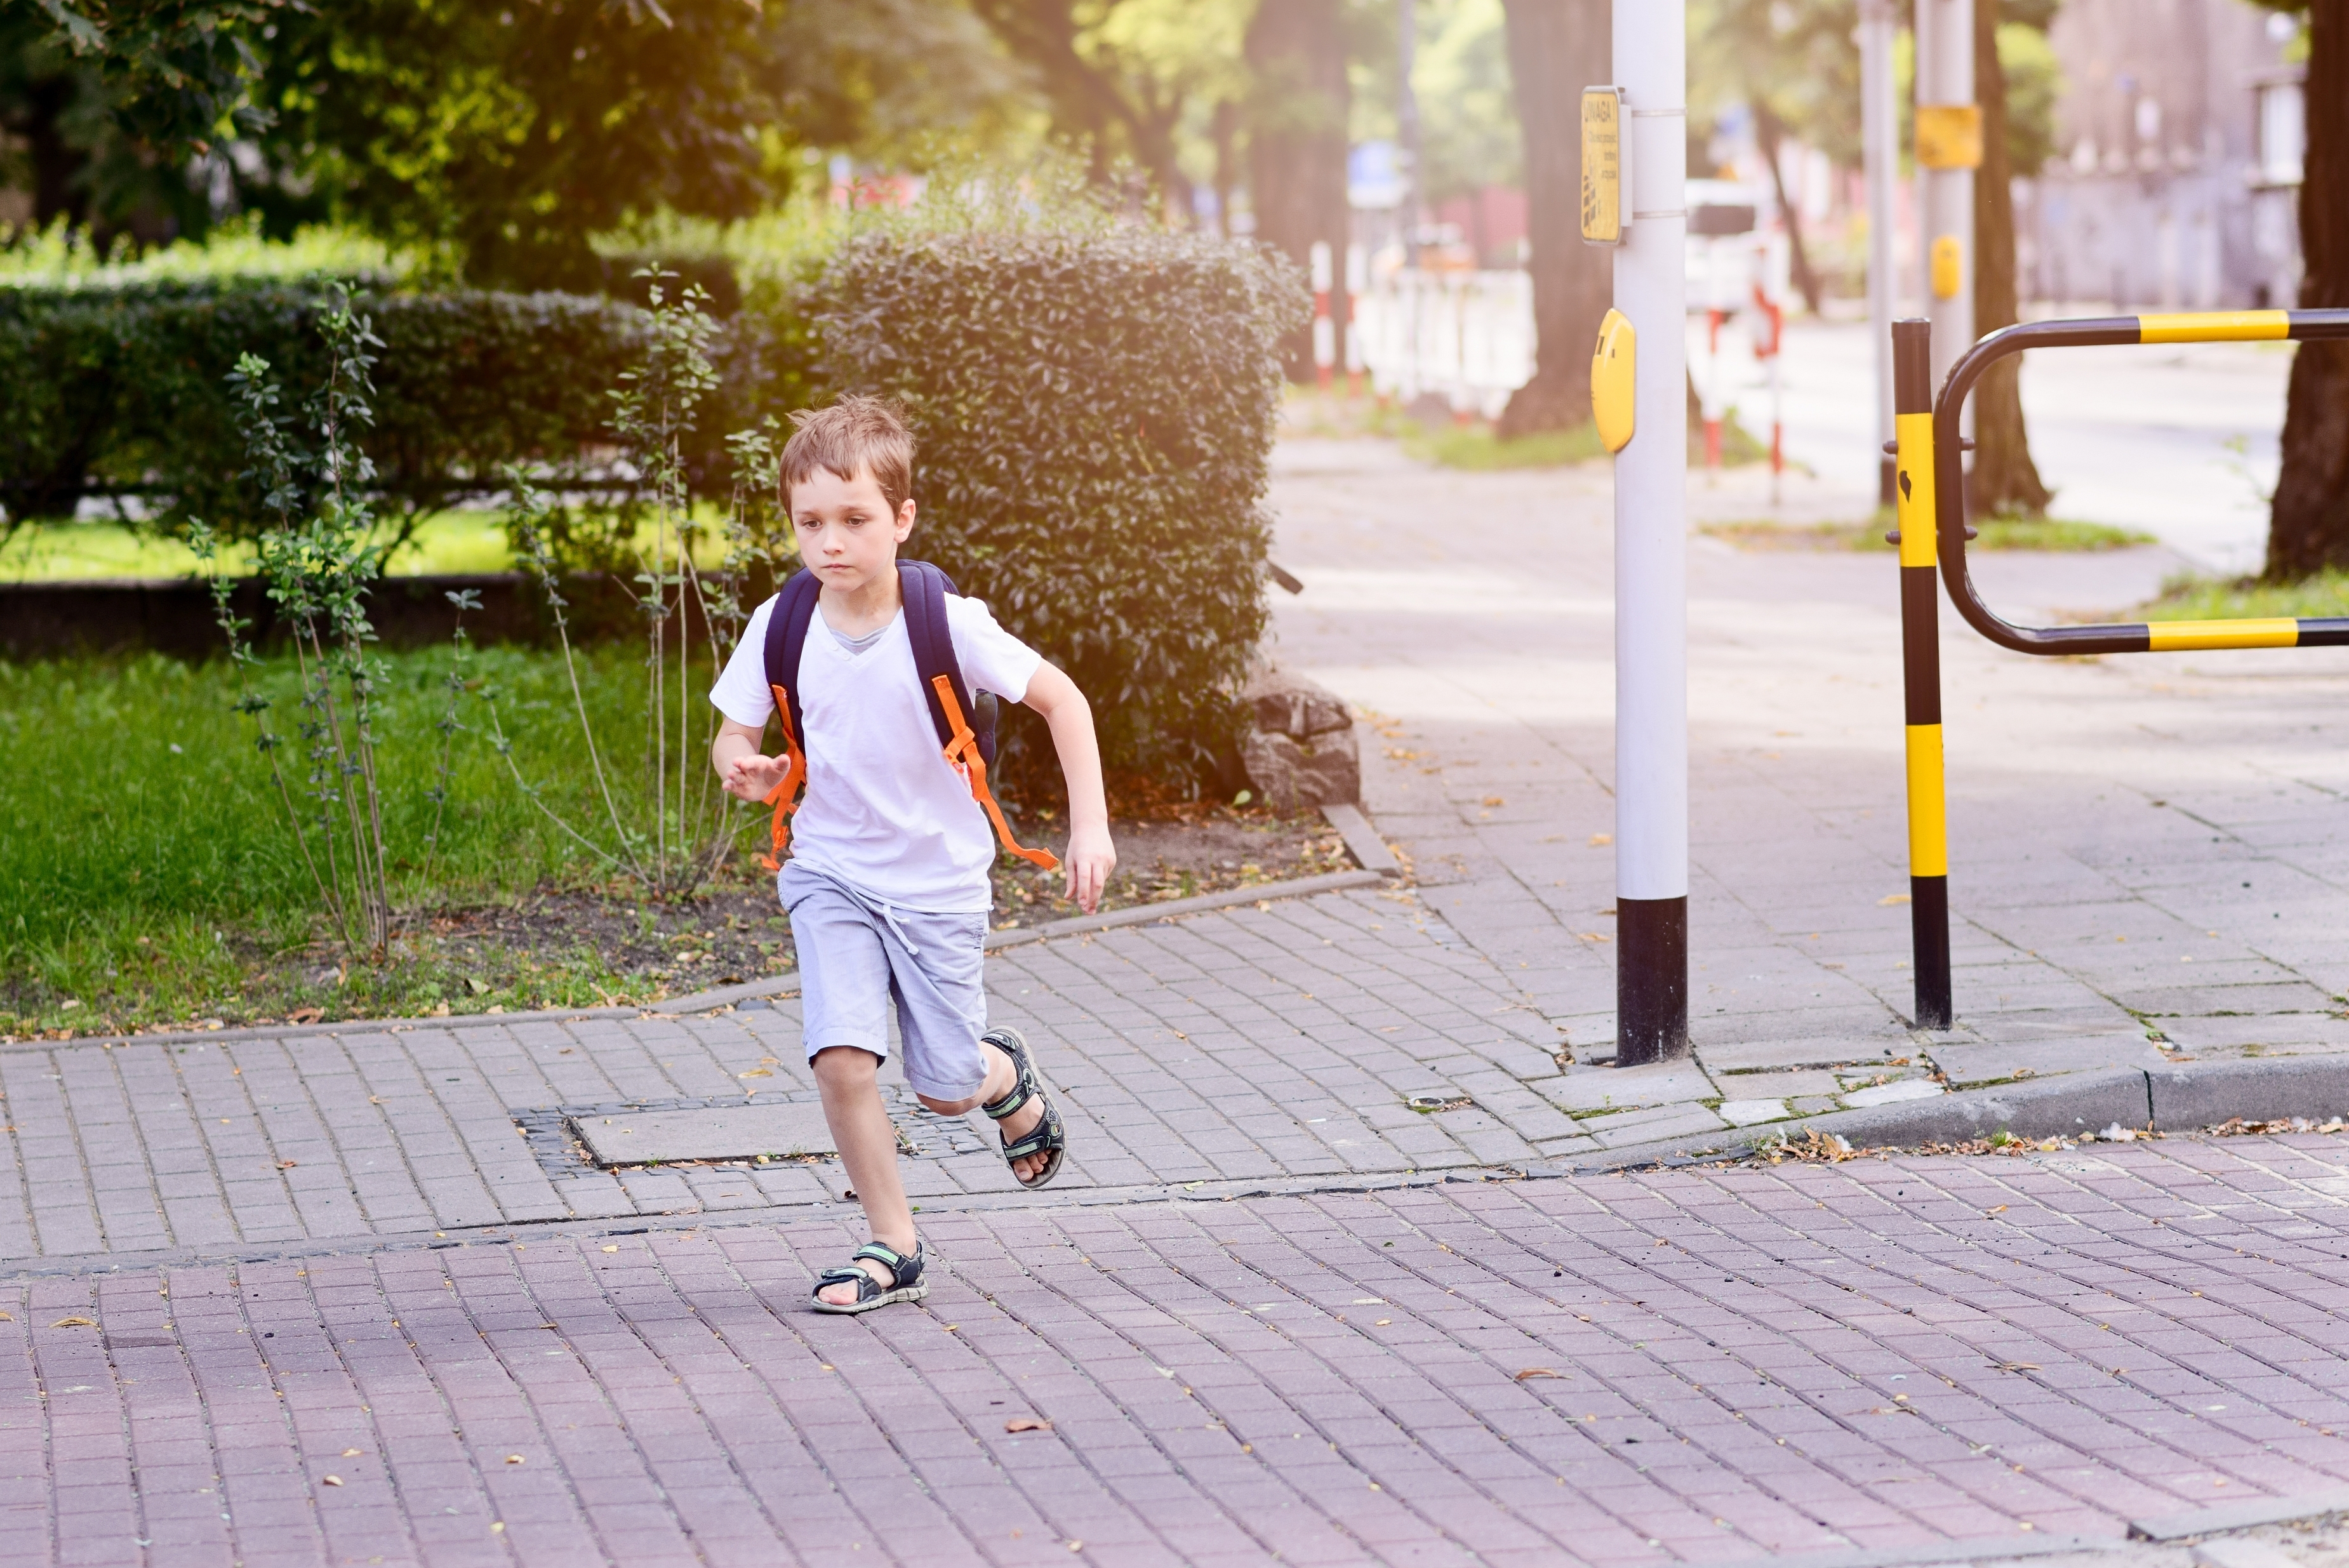 Little 7 years schoolboy is running on street | Source: Shutterstock.com